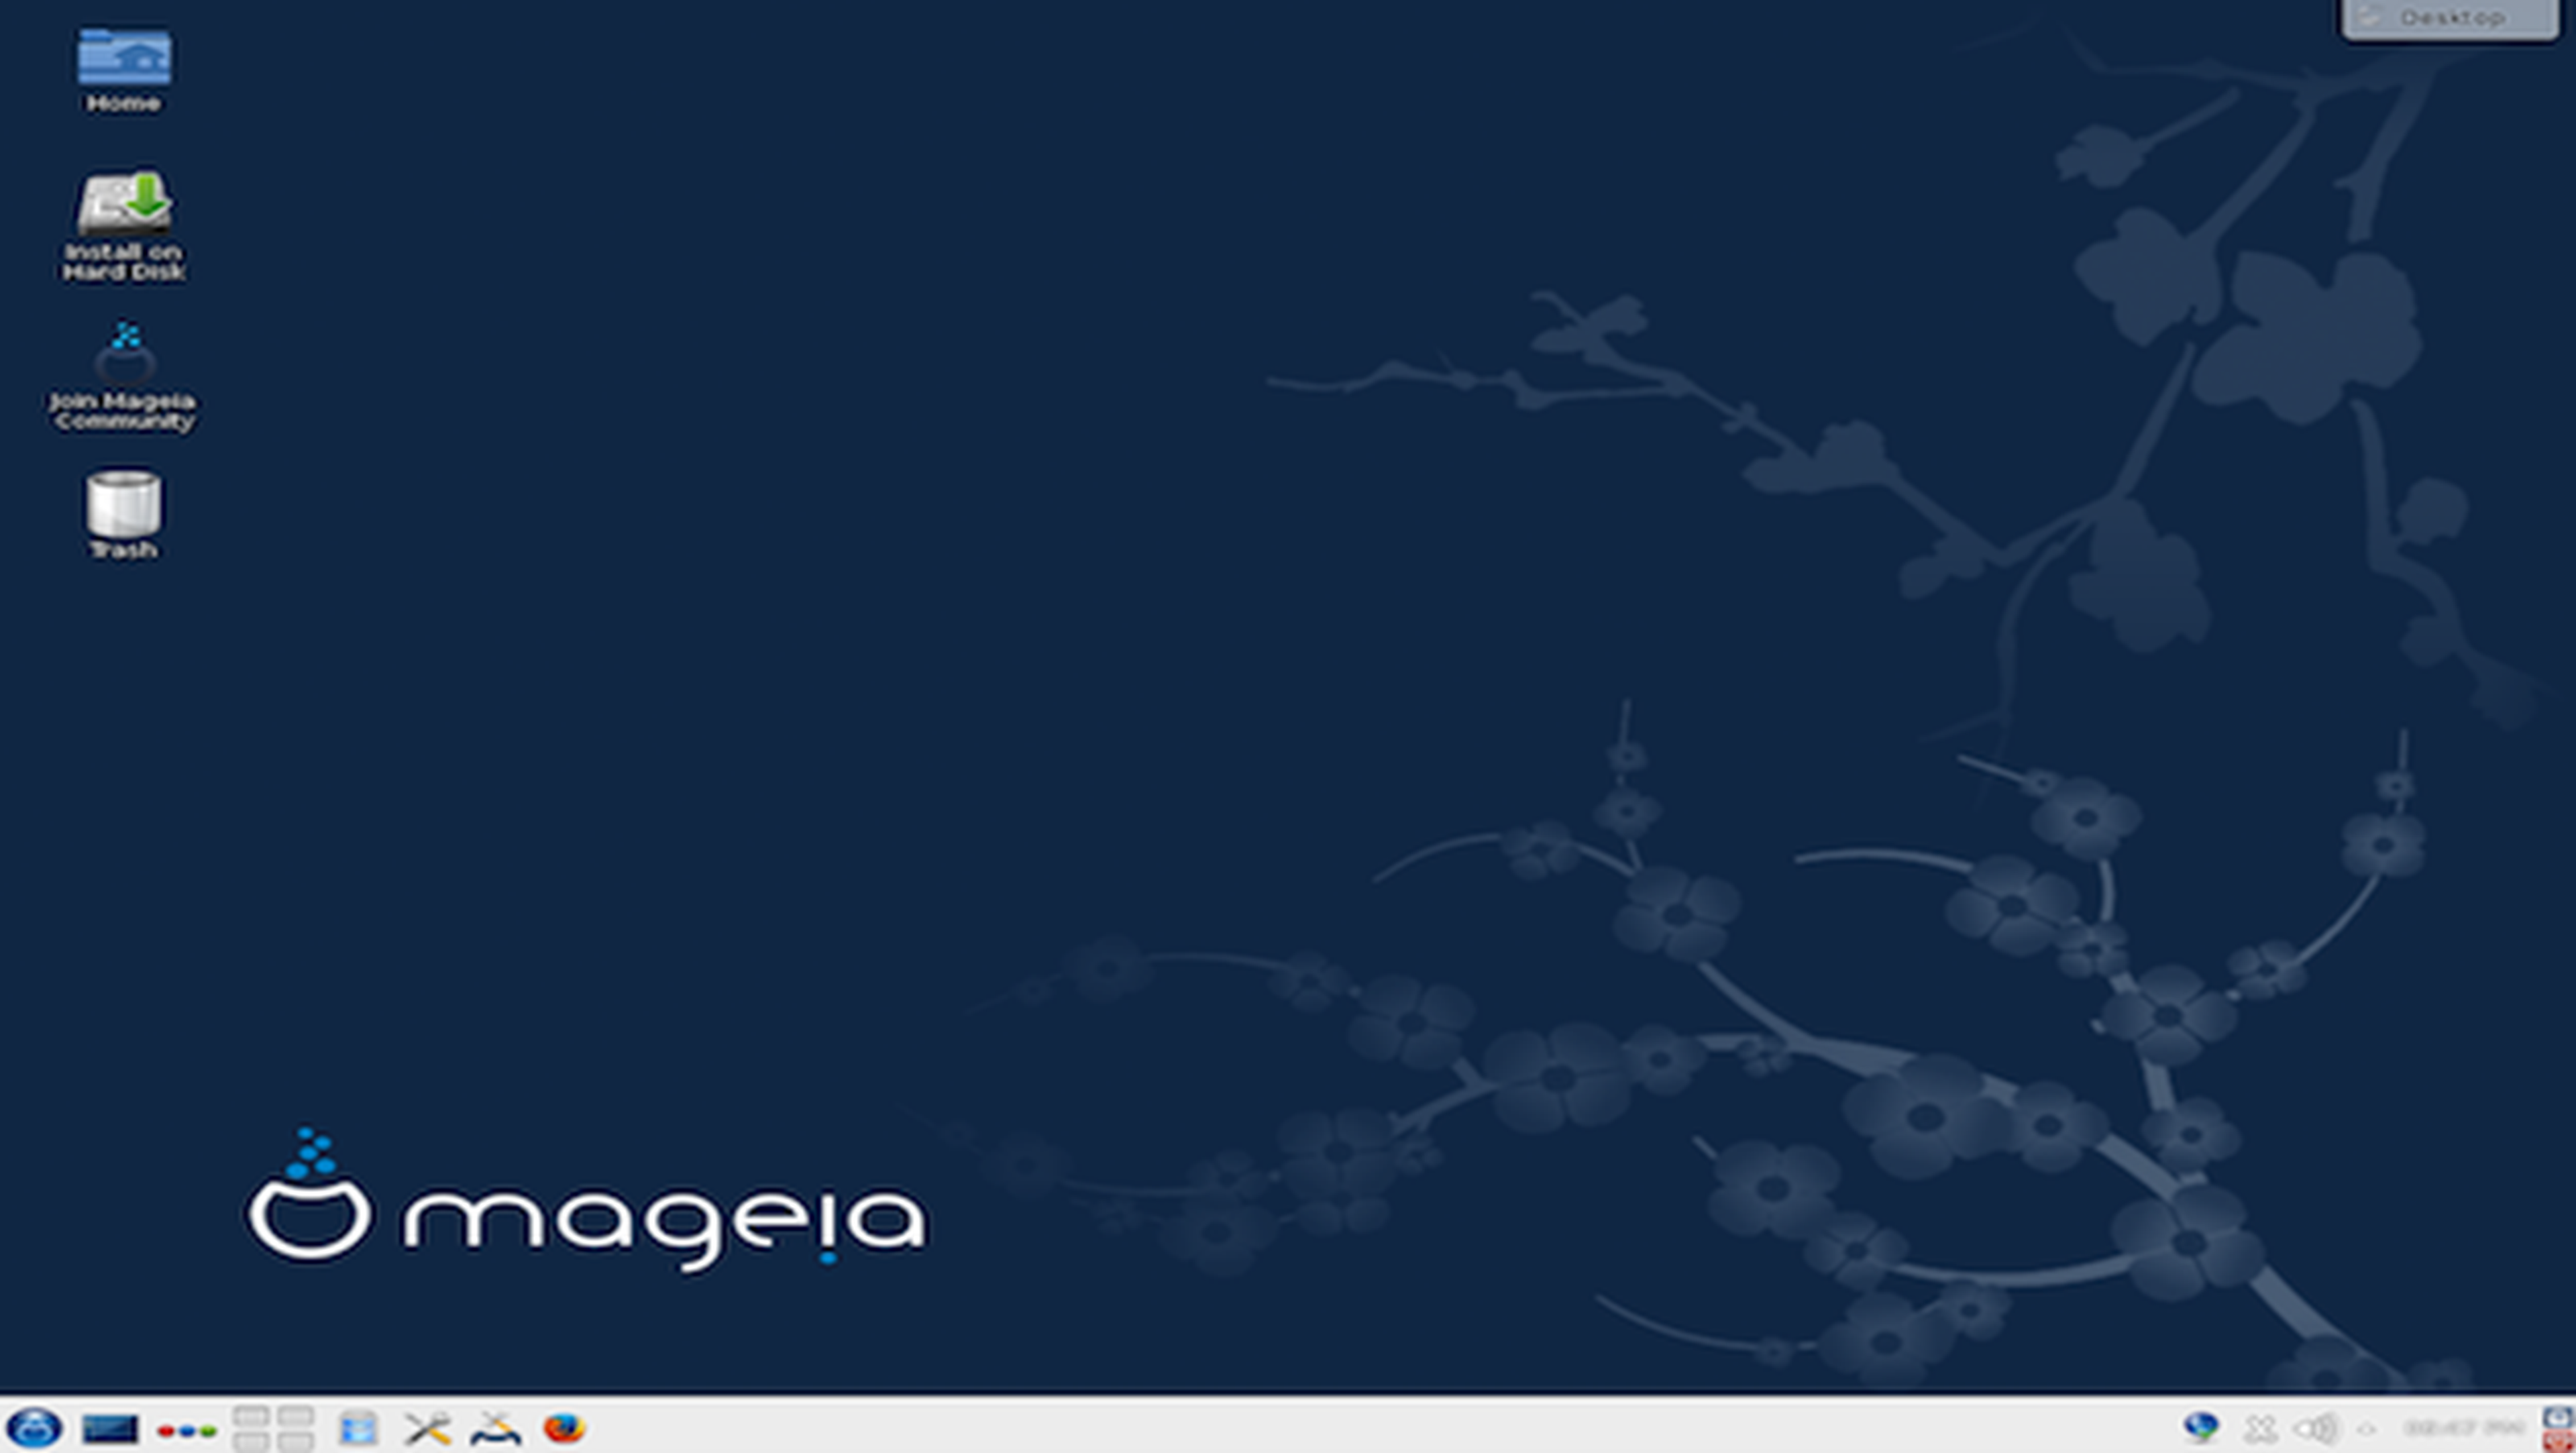 El origen de Mageia está en Mandriva Linux